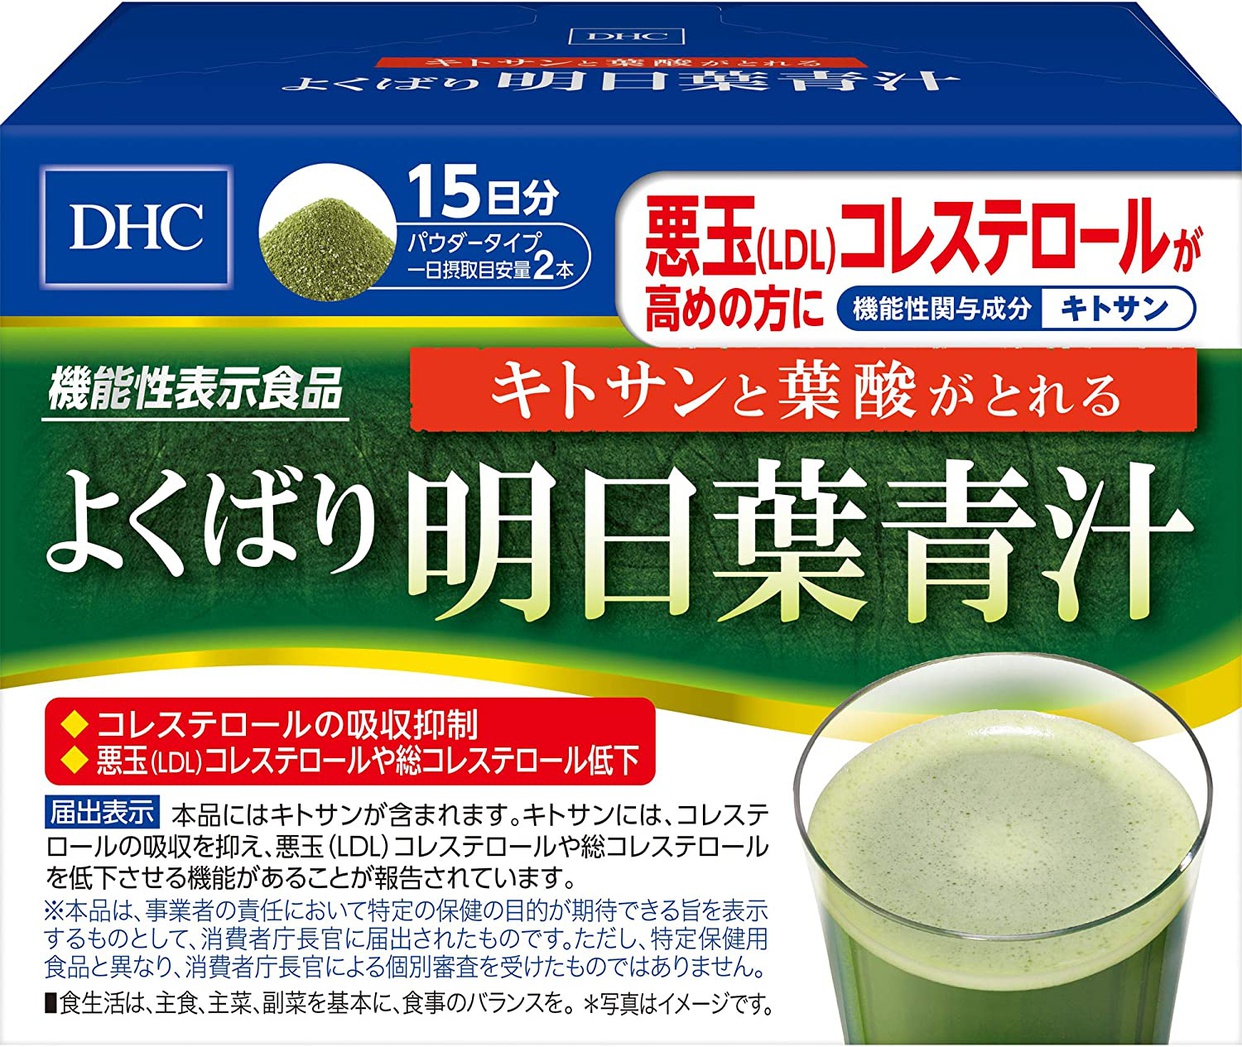 DHC(ディーエイチシー) キトサンと葉酸がとれる よくばり明日葉青汁の商品画像サムネ2 